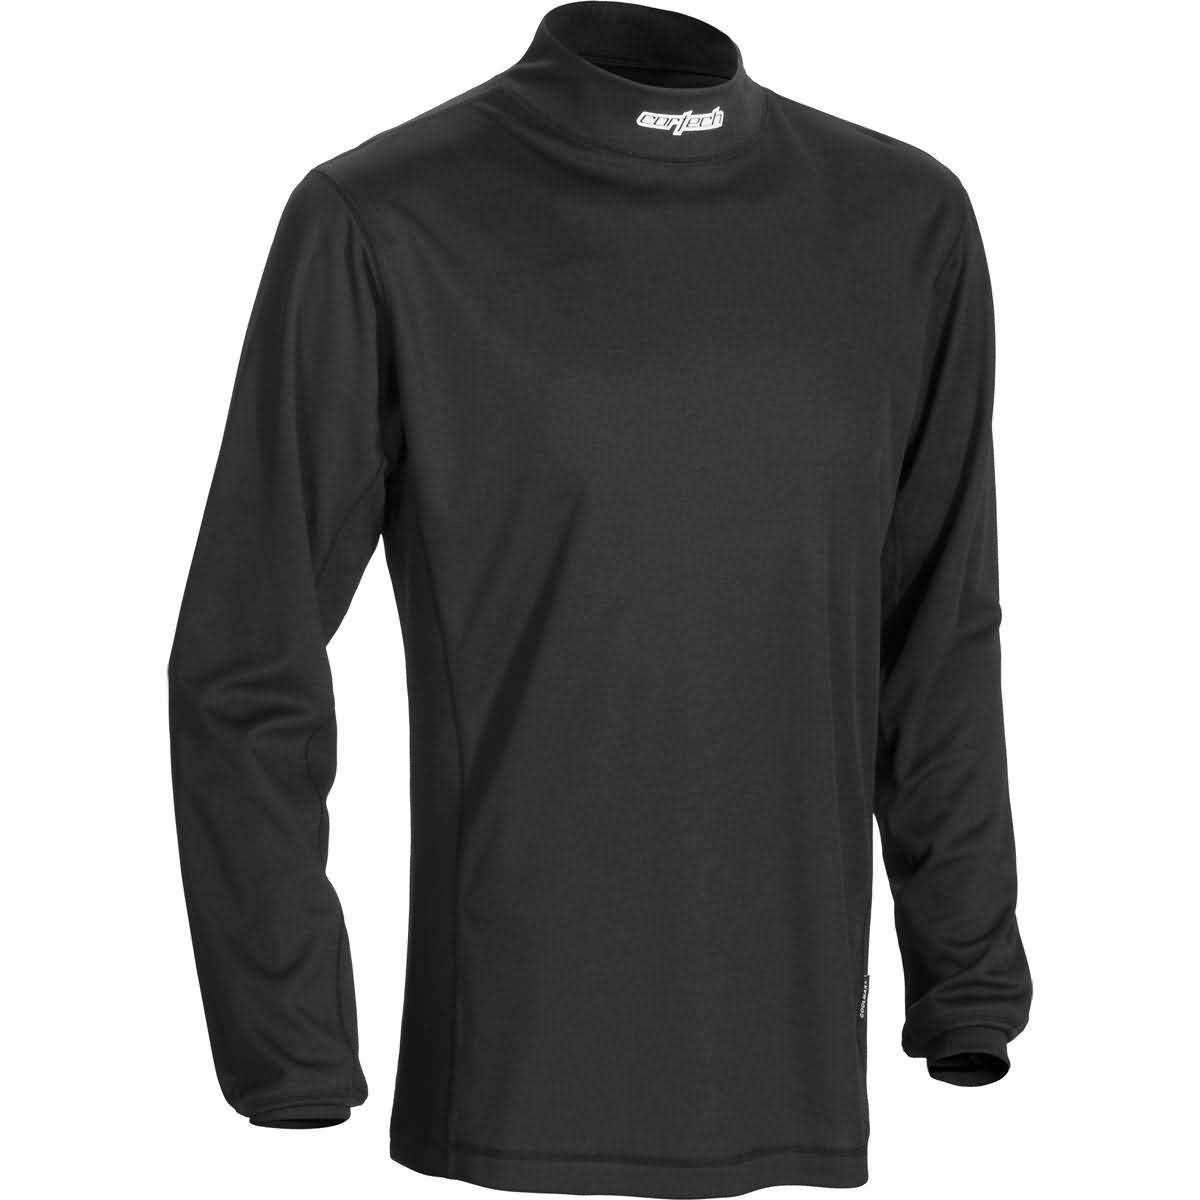 Revolutional Long Sleeve Compression Race/Exercise Shirt - Jubea